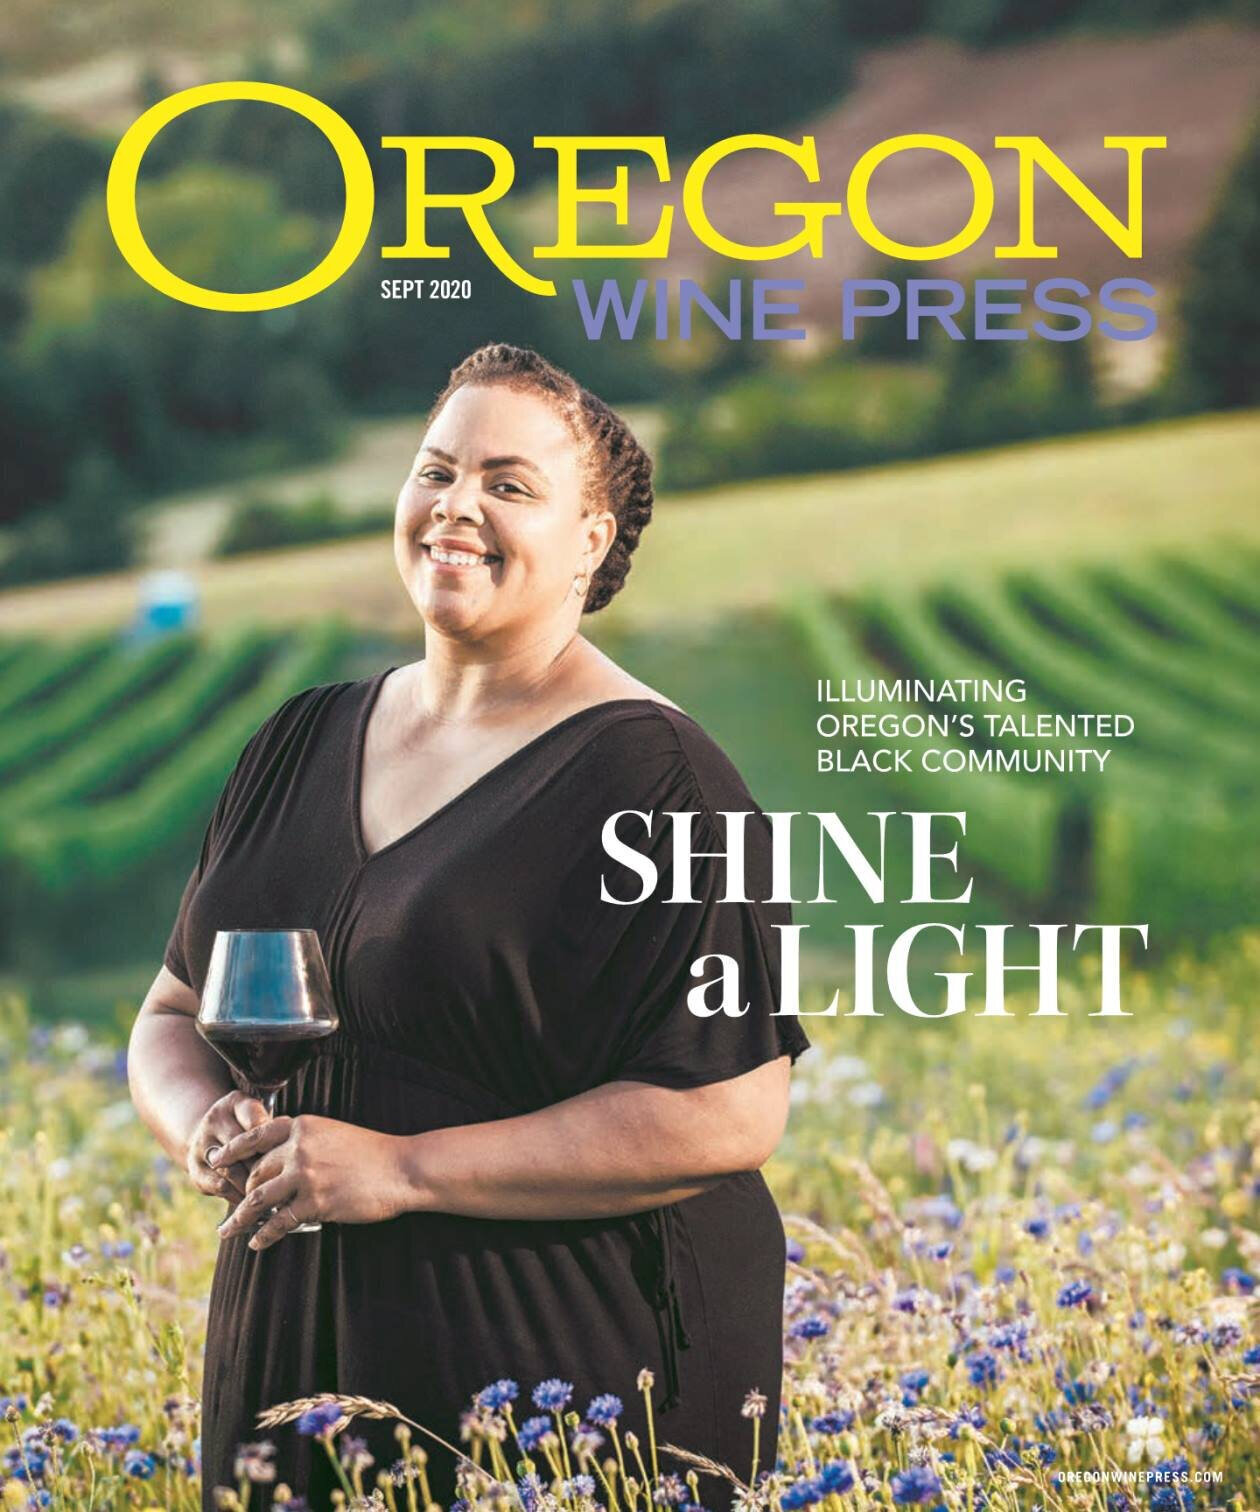 “Shine a Light” by Oregon Wine Press